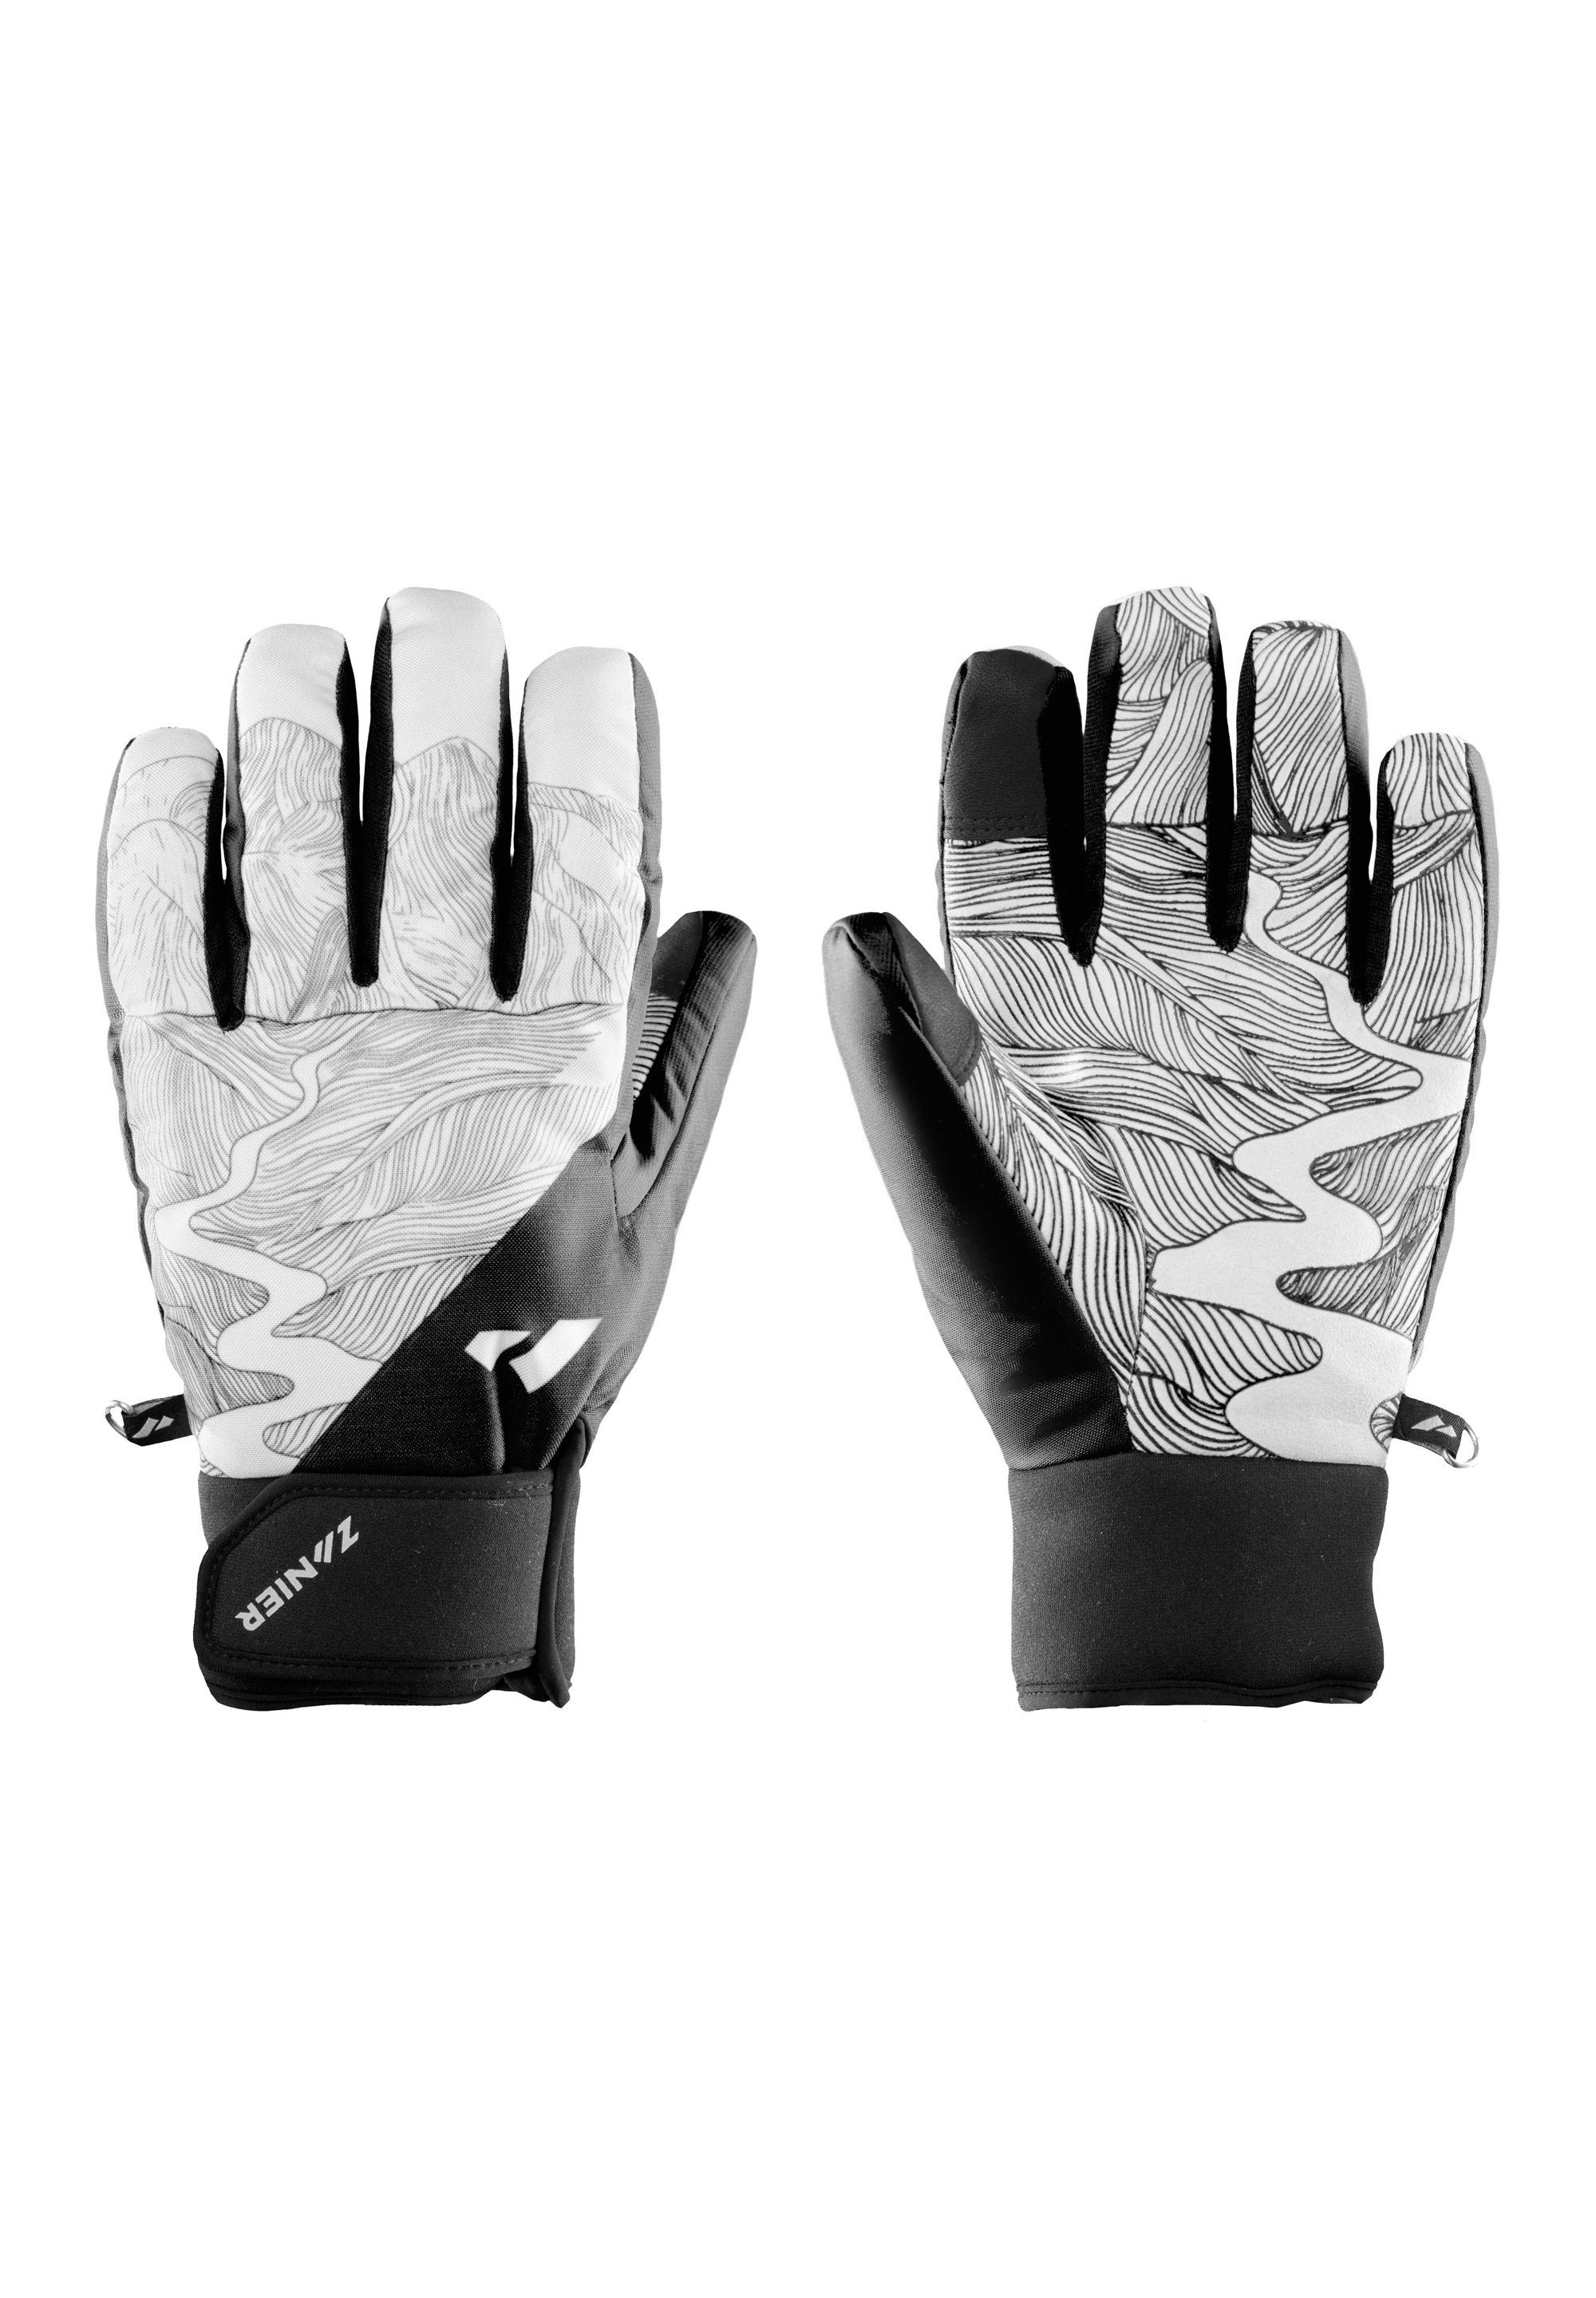 - Black gloves FREE.GTX on White Multisporthandschuhe focus We Zanier